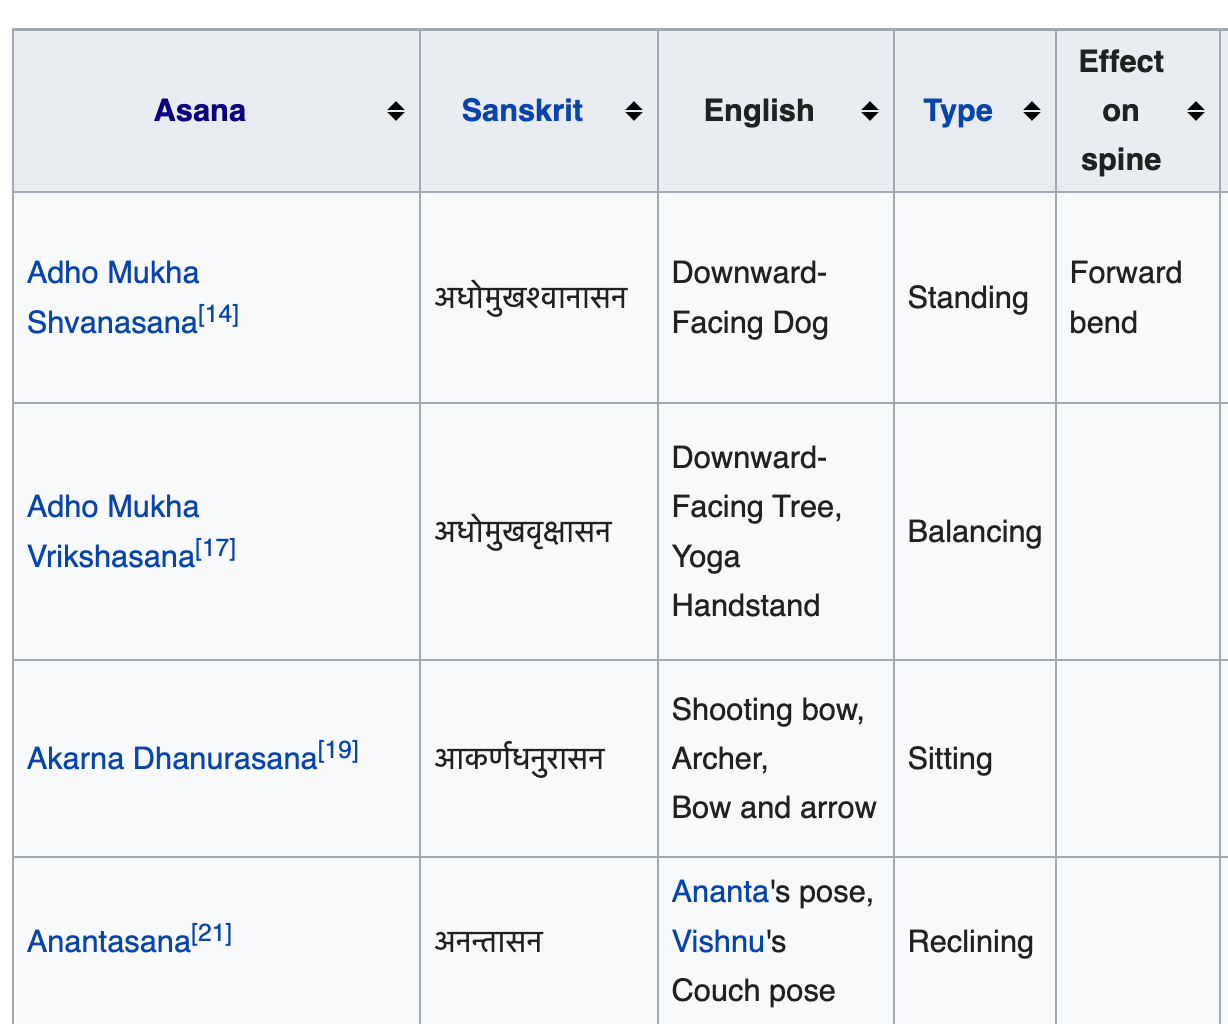 List of asanas, via Wikipedia